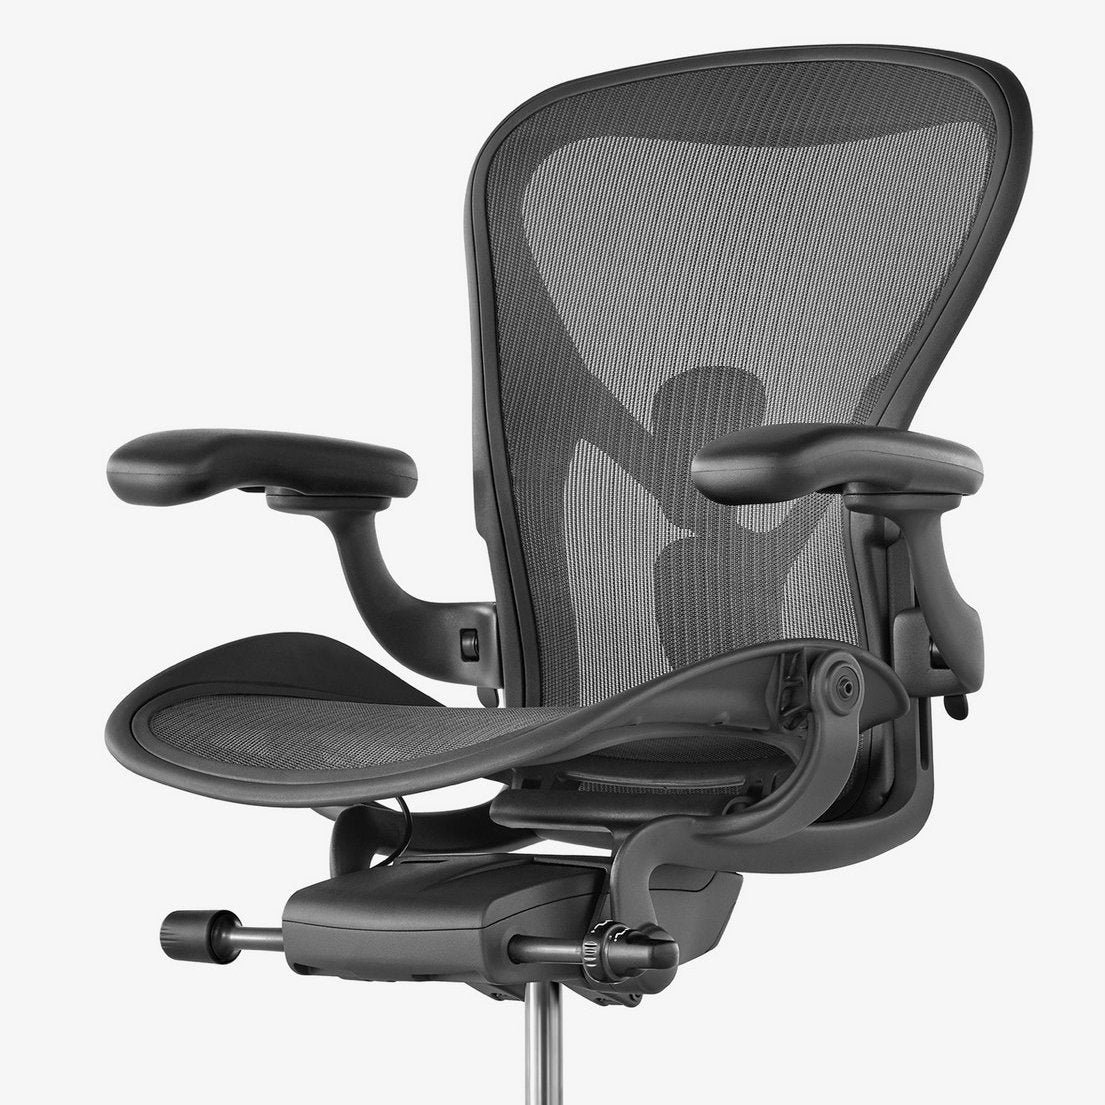 Aeron Chair Remastered Graphite.LG 71228822 9962 442c Ada6 74ea95d9375c ?v=1552977615